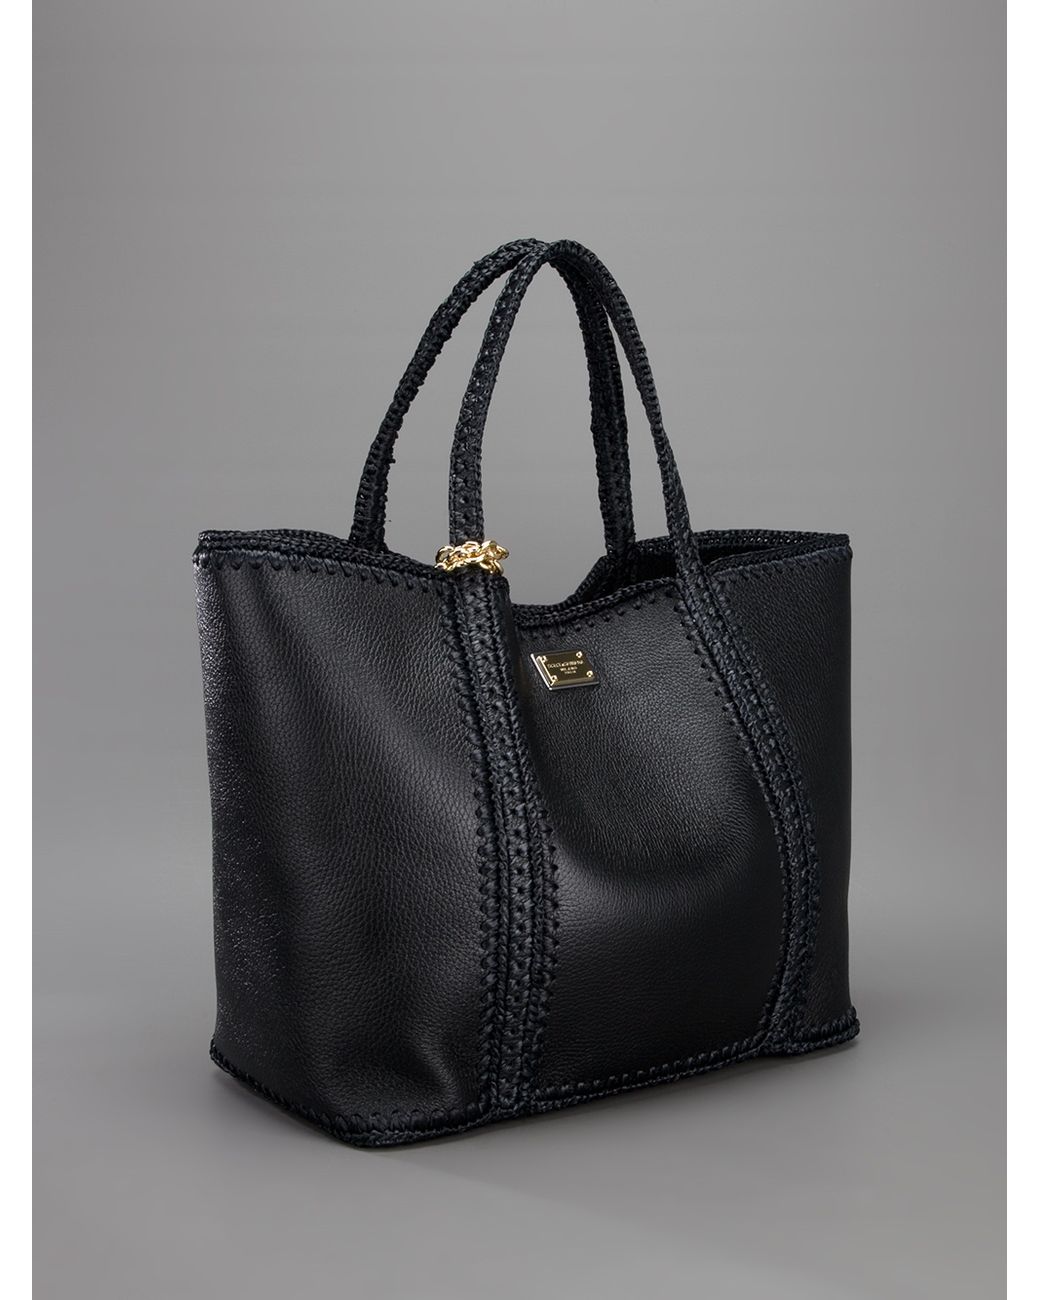 Dolce & Gabbana Miss Escape Tote Bag in Black | Lyst